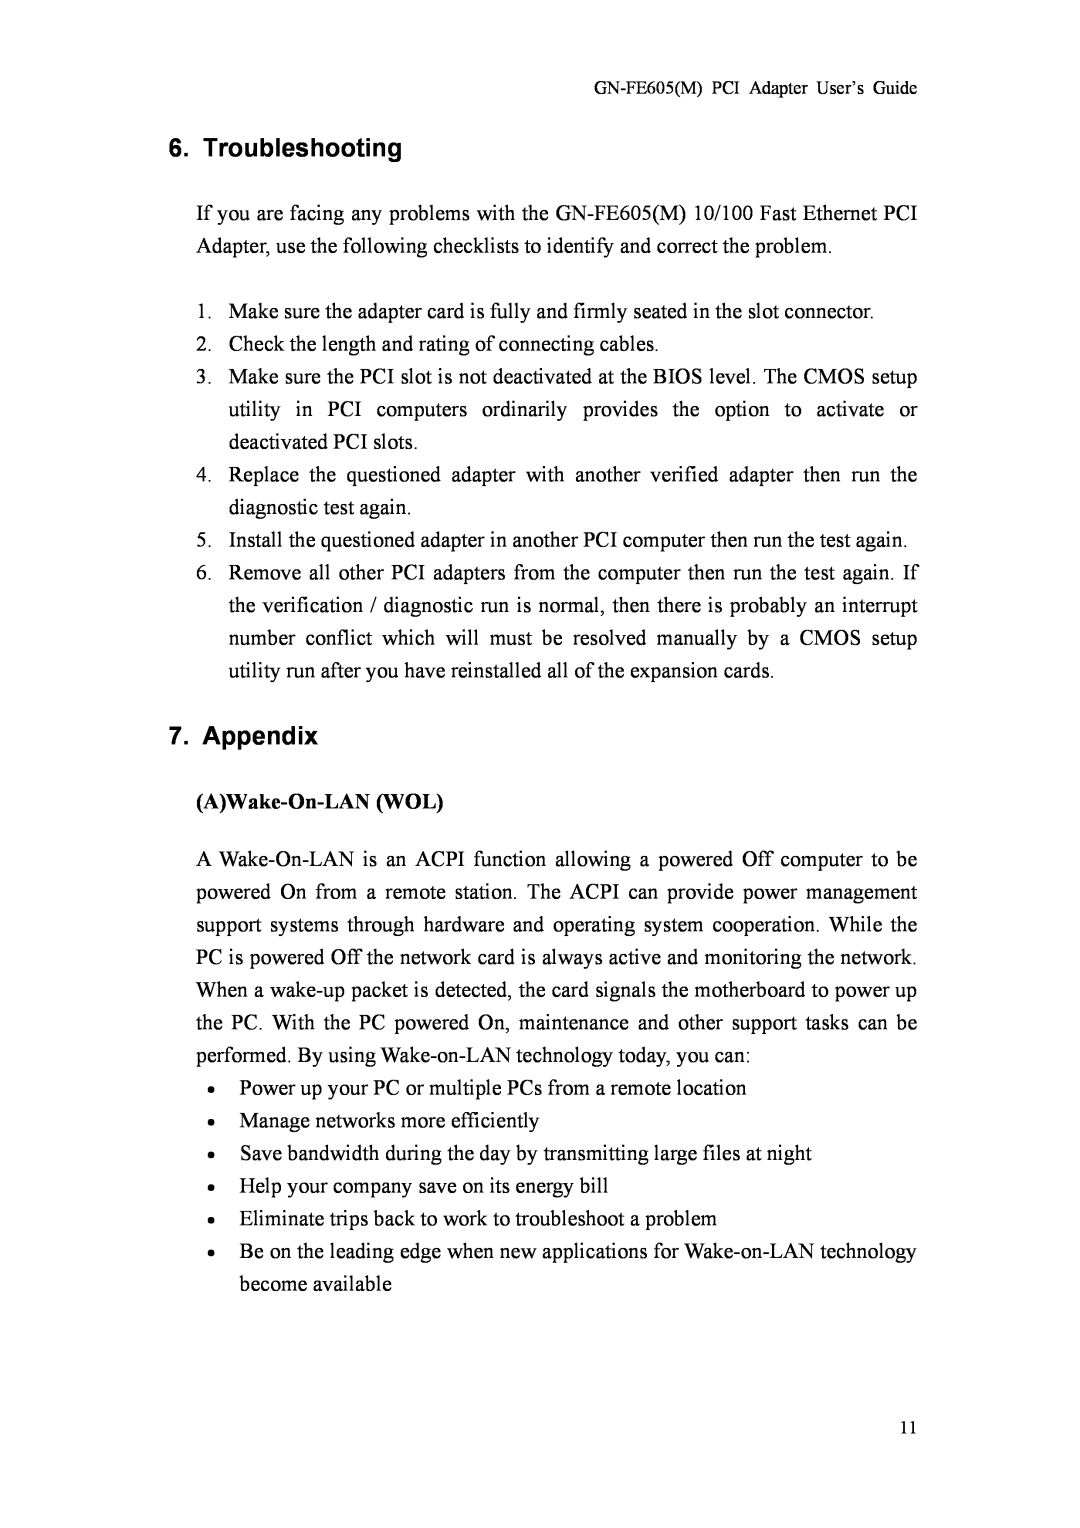 Gigabyte GN-FE605(M) manual Troubleshooting, Appendix, AWake-On-LAN WOL 